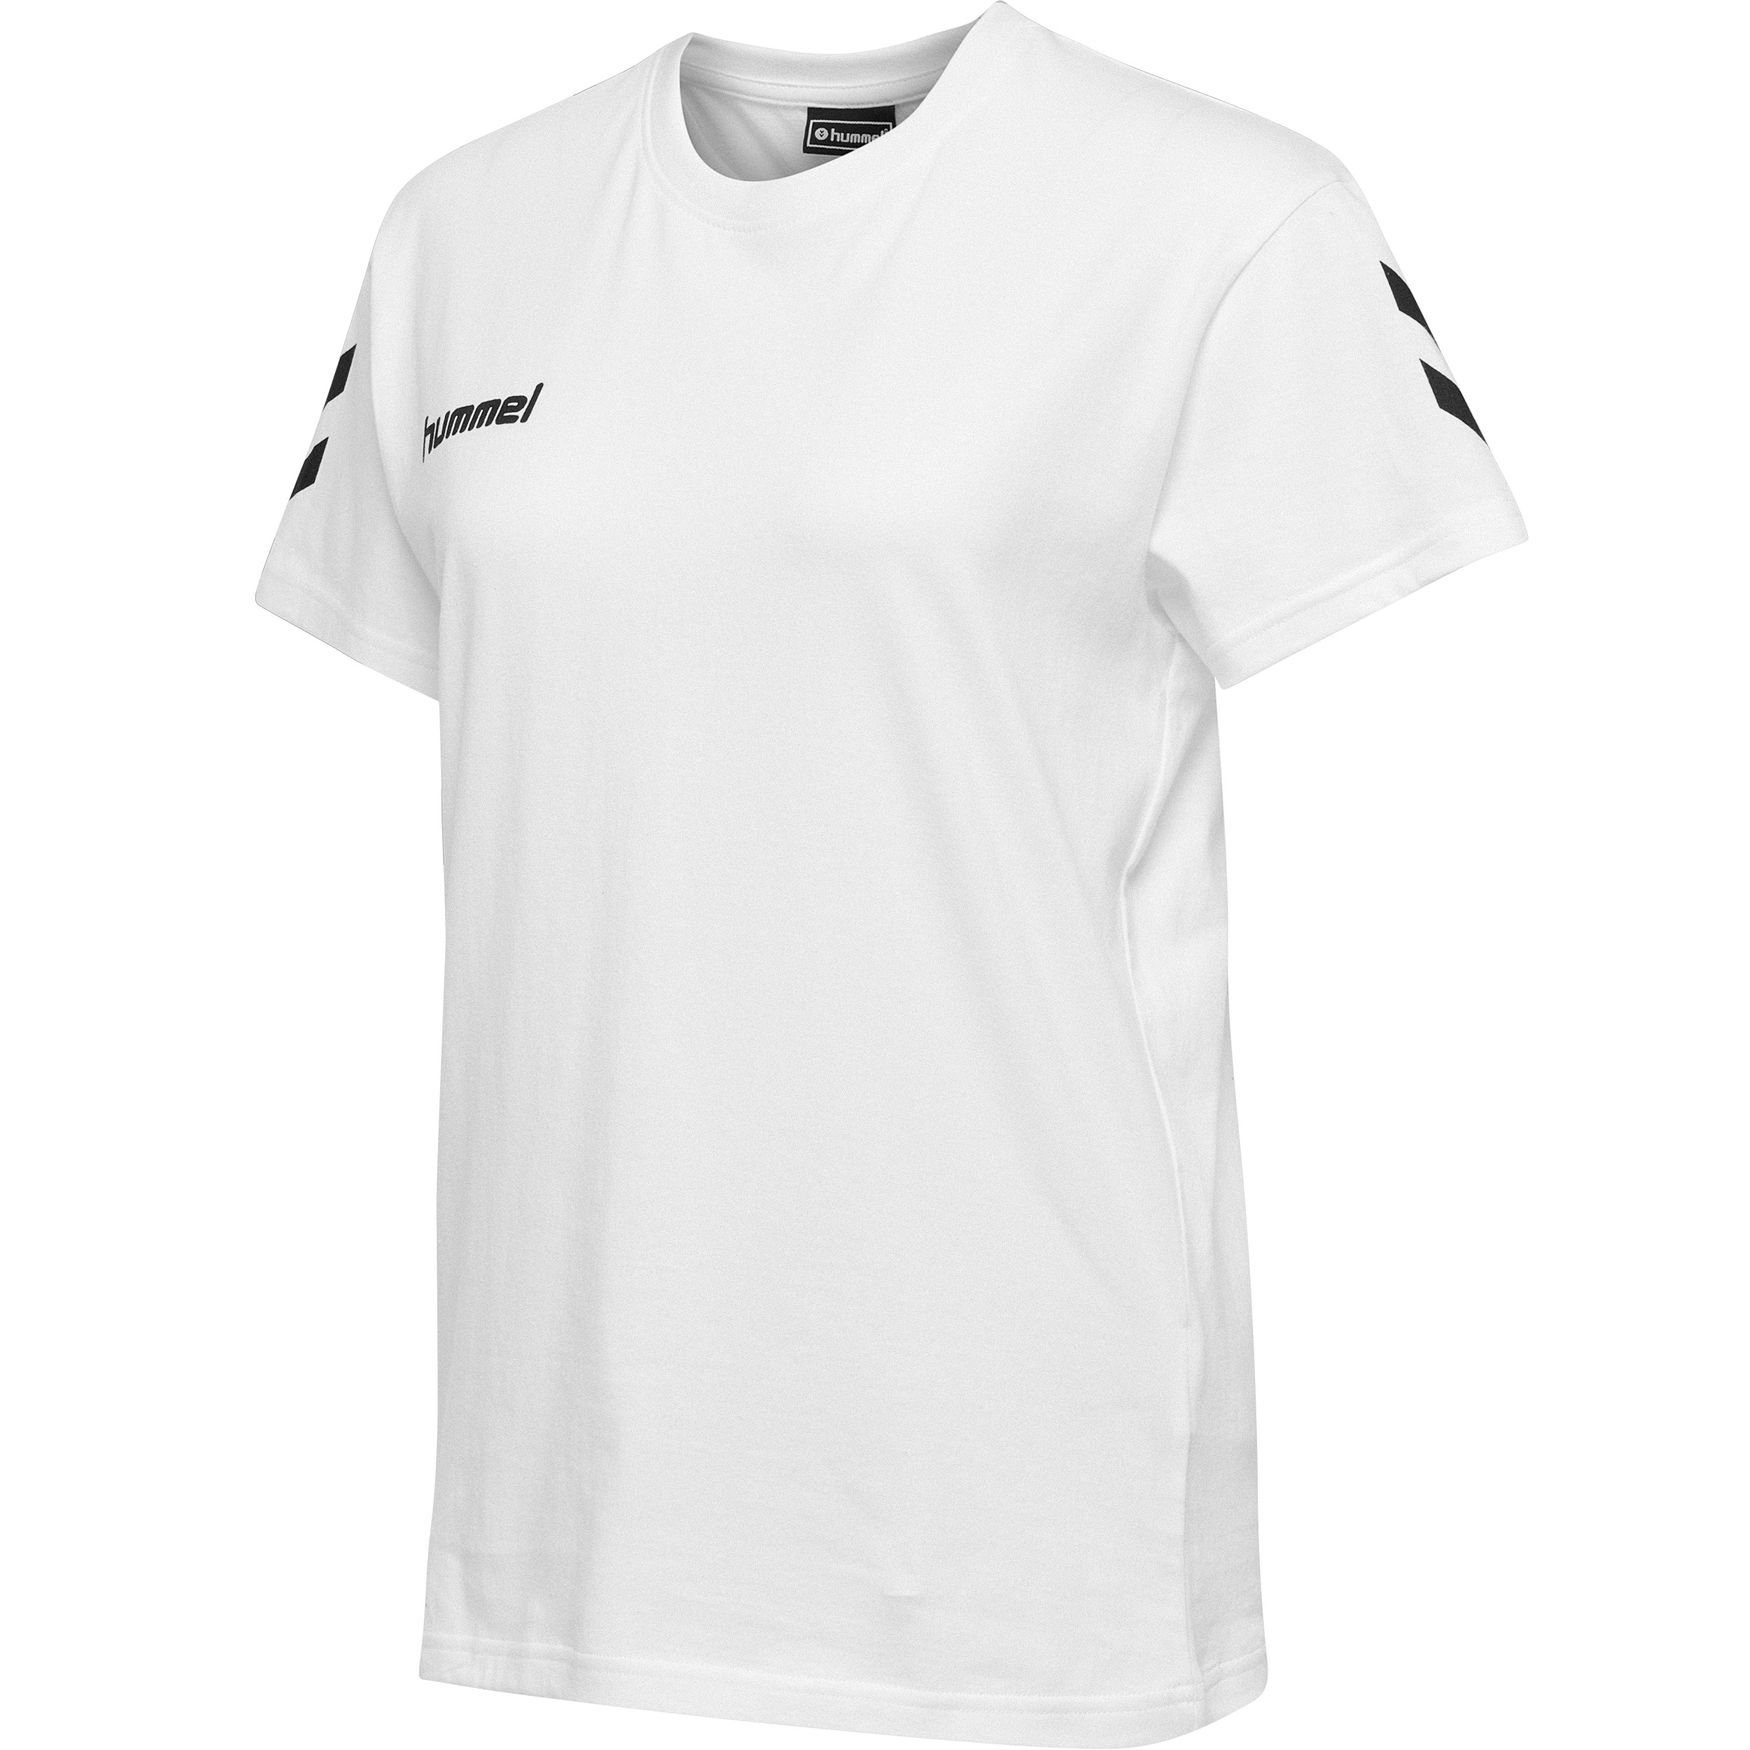 T-Shirt HMLGO Kurzarm Top Baumwolle 5124 in hummel aus Logo T-Shirt Weiß